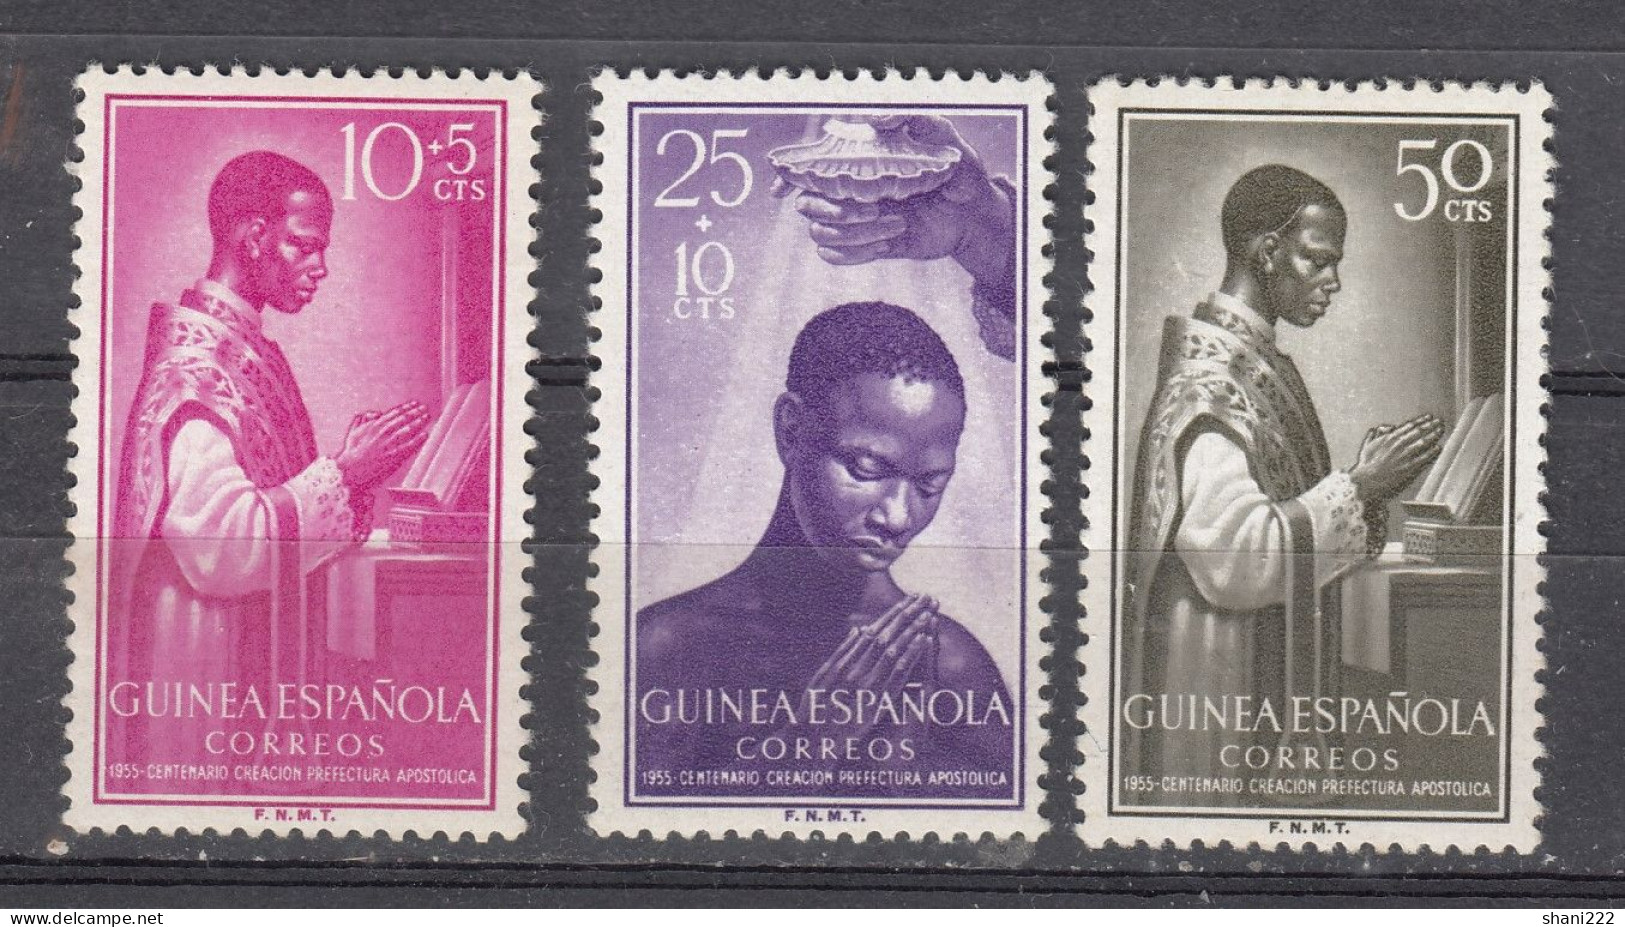 Spanish Guinea - 1955 Prefectura Apostolica - MNH (e-812) - Spaans-Guinea